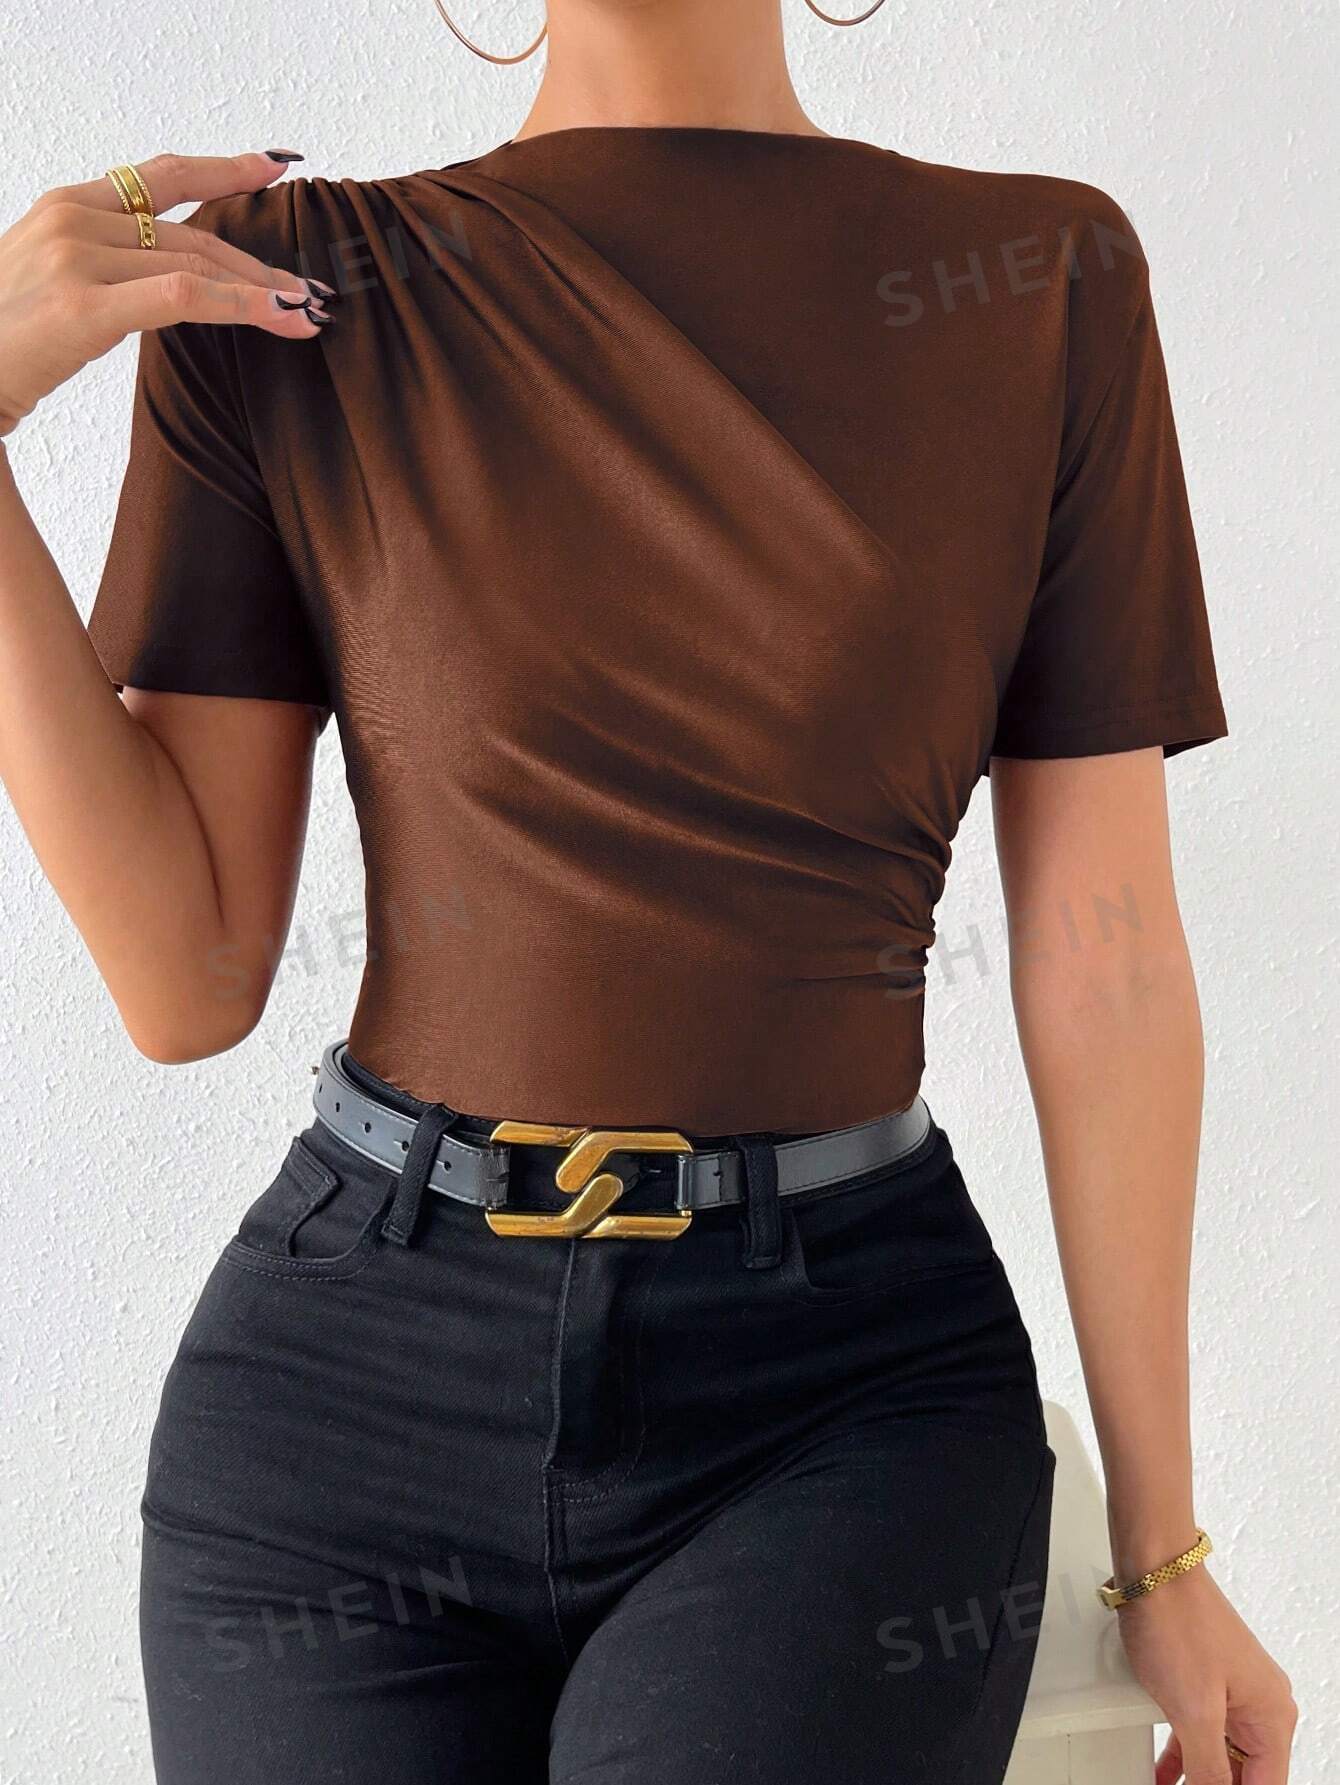 SHEIN Однотонная приталенная футболка Frenchy с воротником-стойкой и складками, коричневый pierre cardın women back low cut ruched nightgown